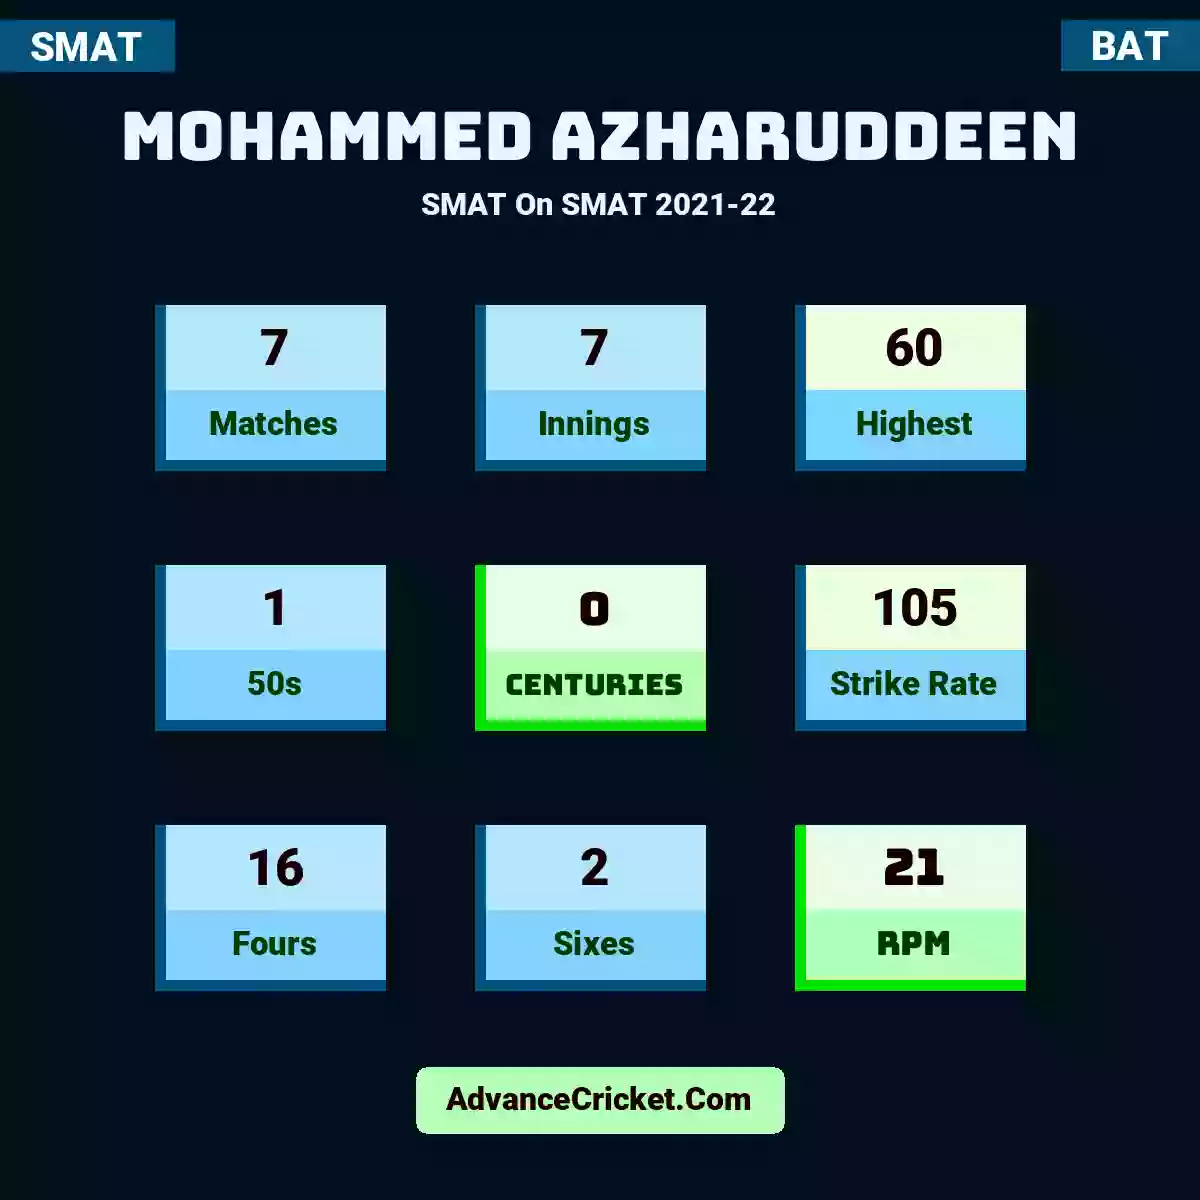 Mohammed Azharuddeen SMAT  On SMAT 2021-22, Mohammed Azharuddeen played 7 matches, scored 60 runs as highest, 1 half-centuries, and 0 centuries, with a strike rate of 105. M.Azharuddeen hit 16 fours and 2 sixes, with an RPM of 21.